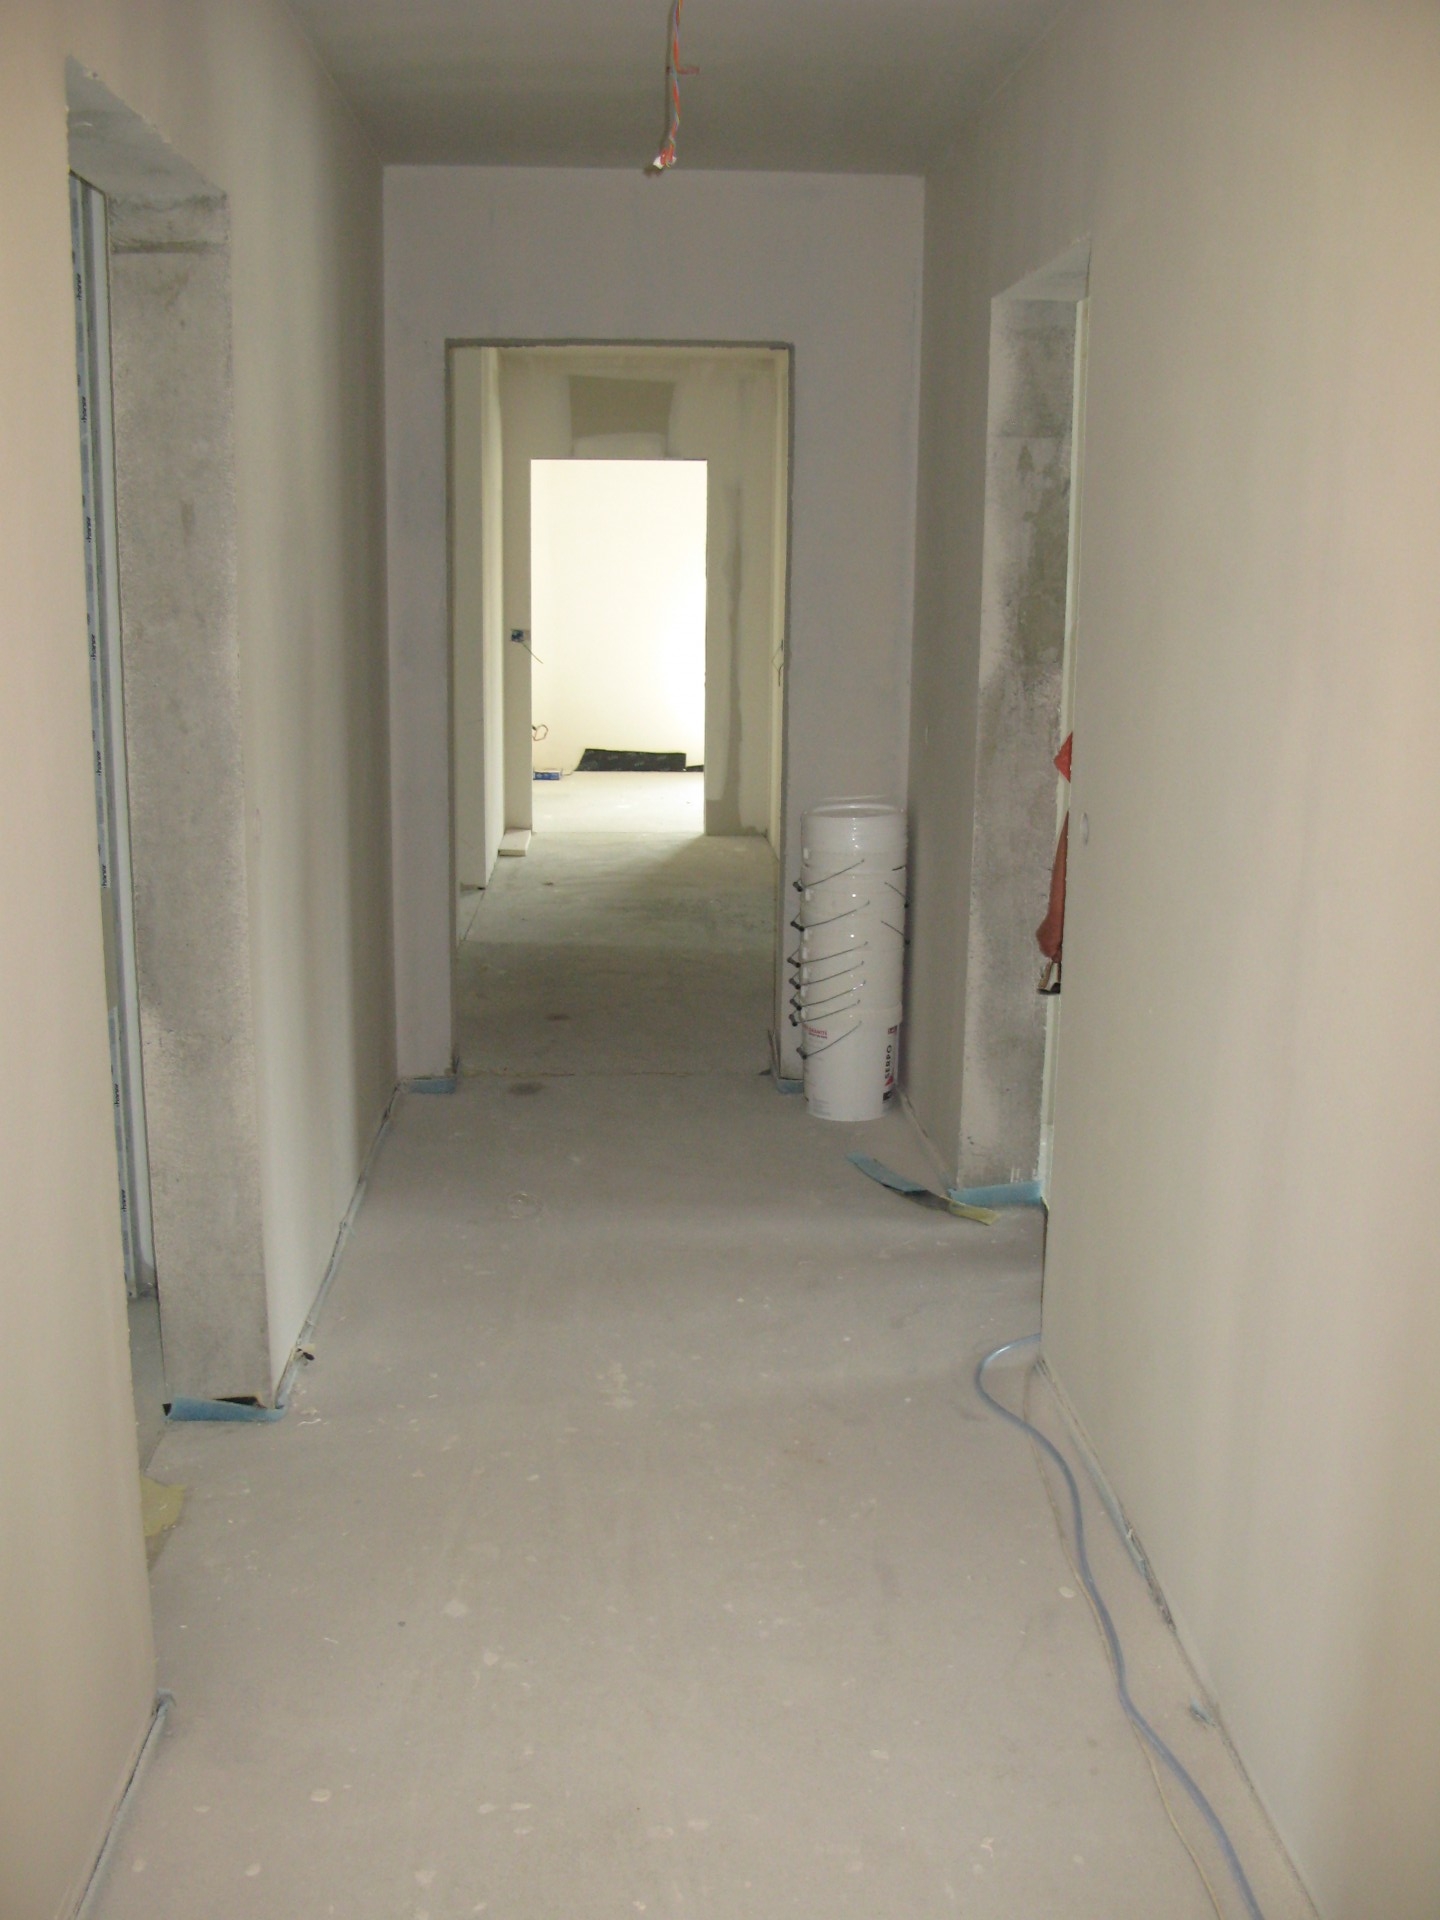 BouxwillerLJdC Mise en peinture couloir Etage2 20200718